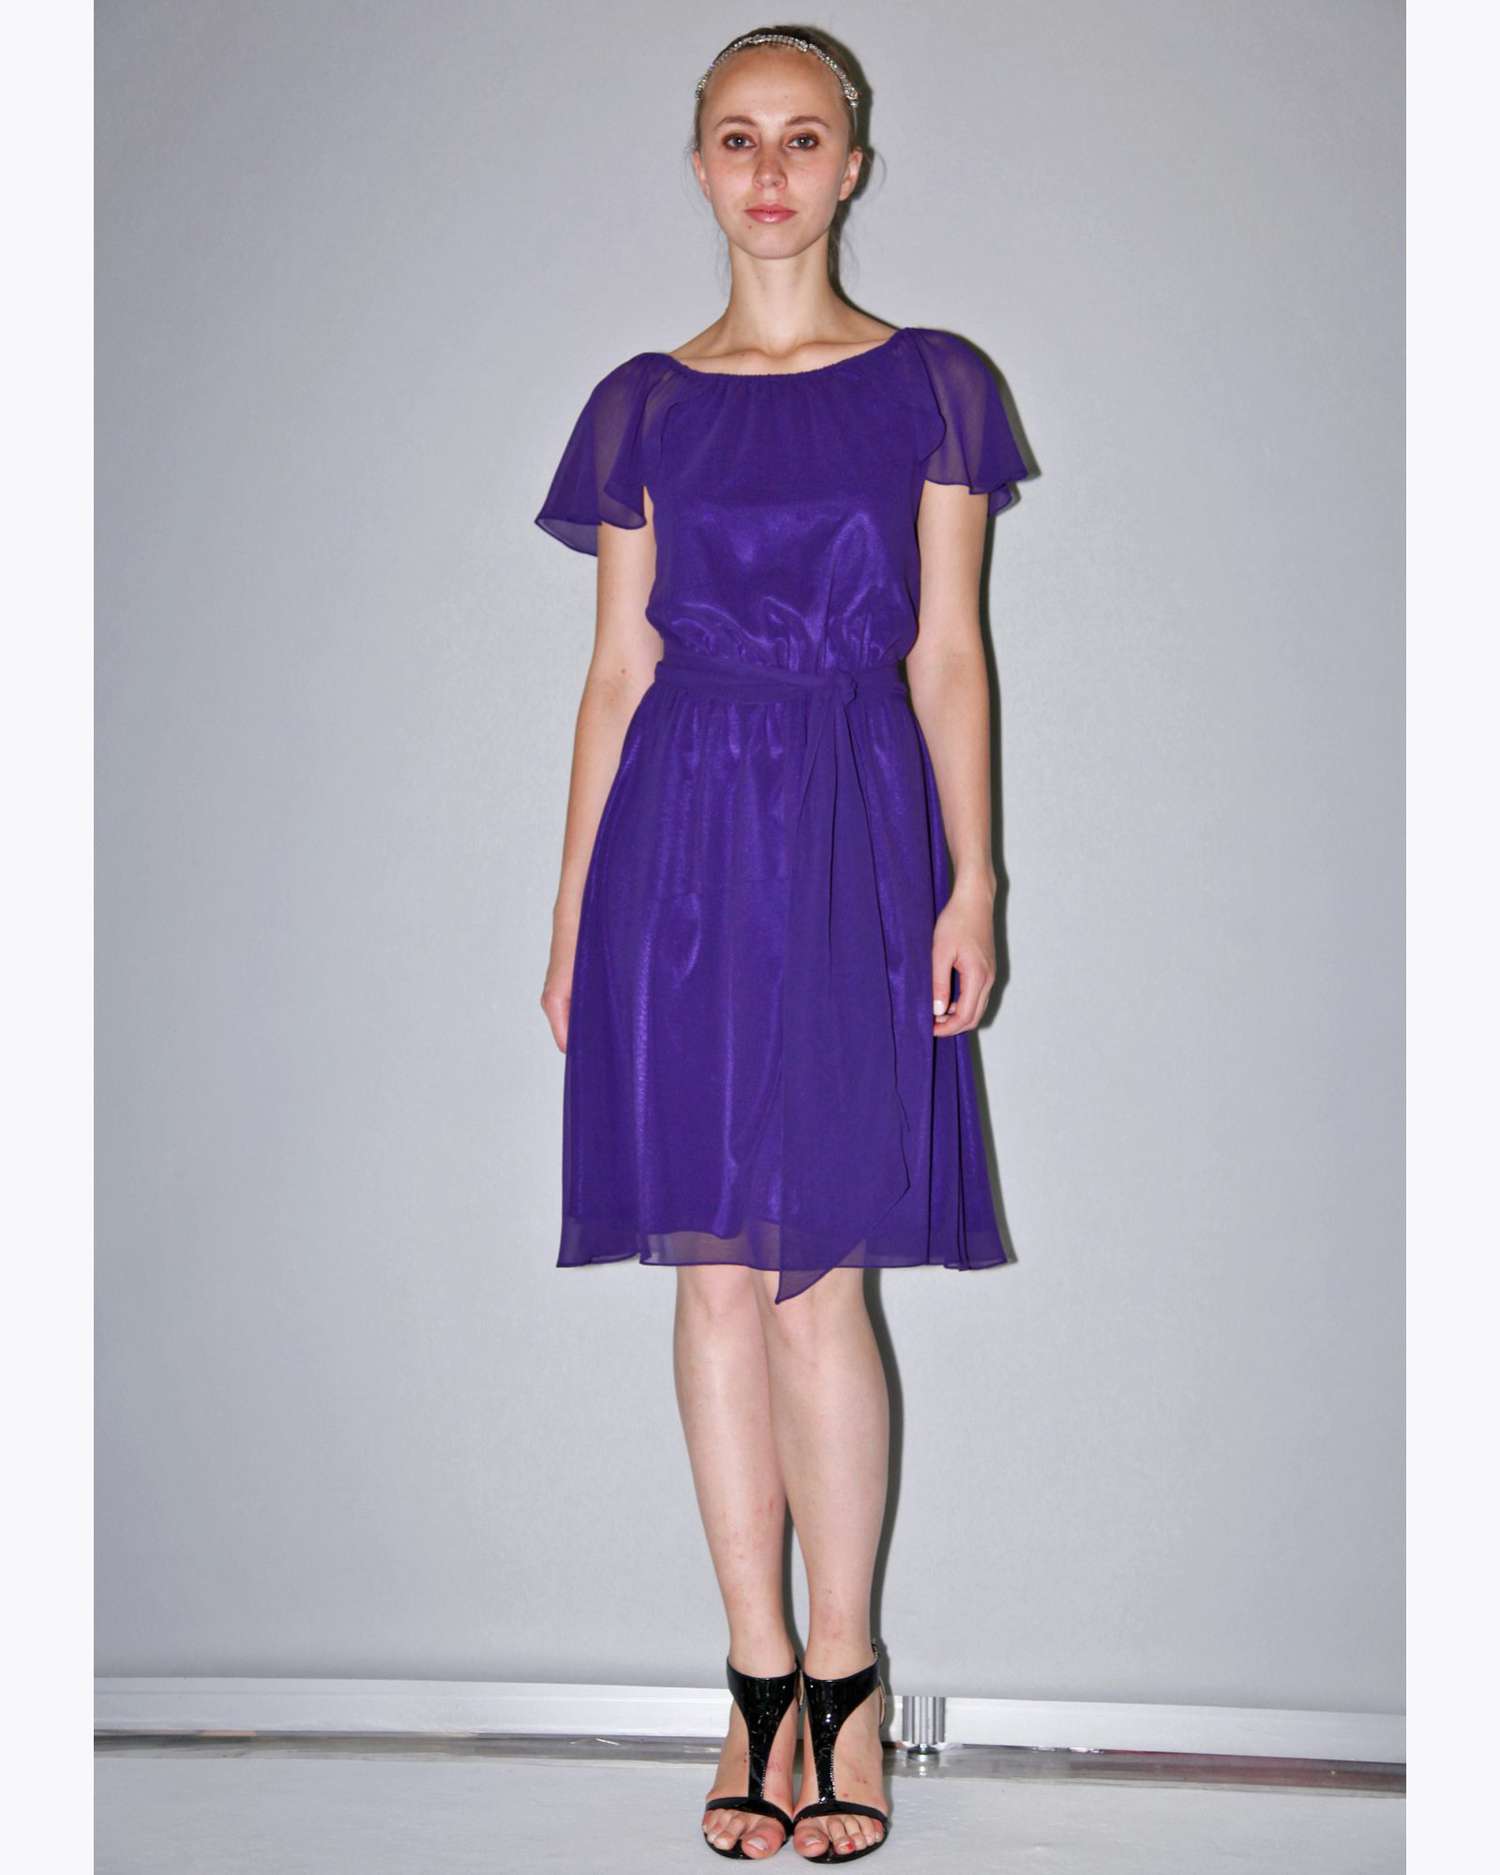 Short Purple Bridesmaid Dress